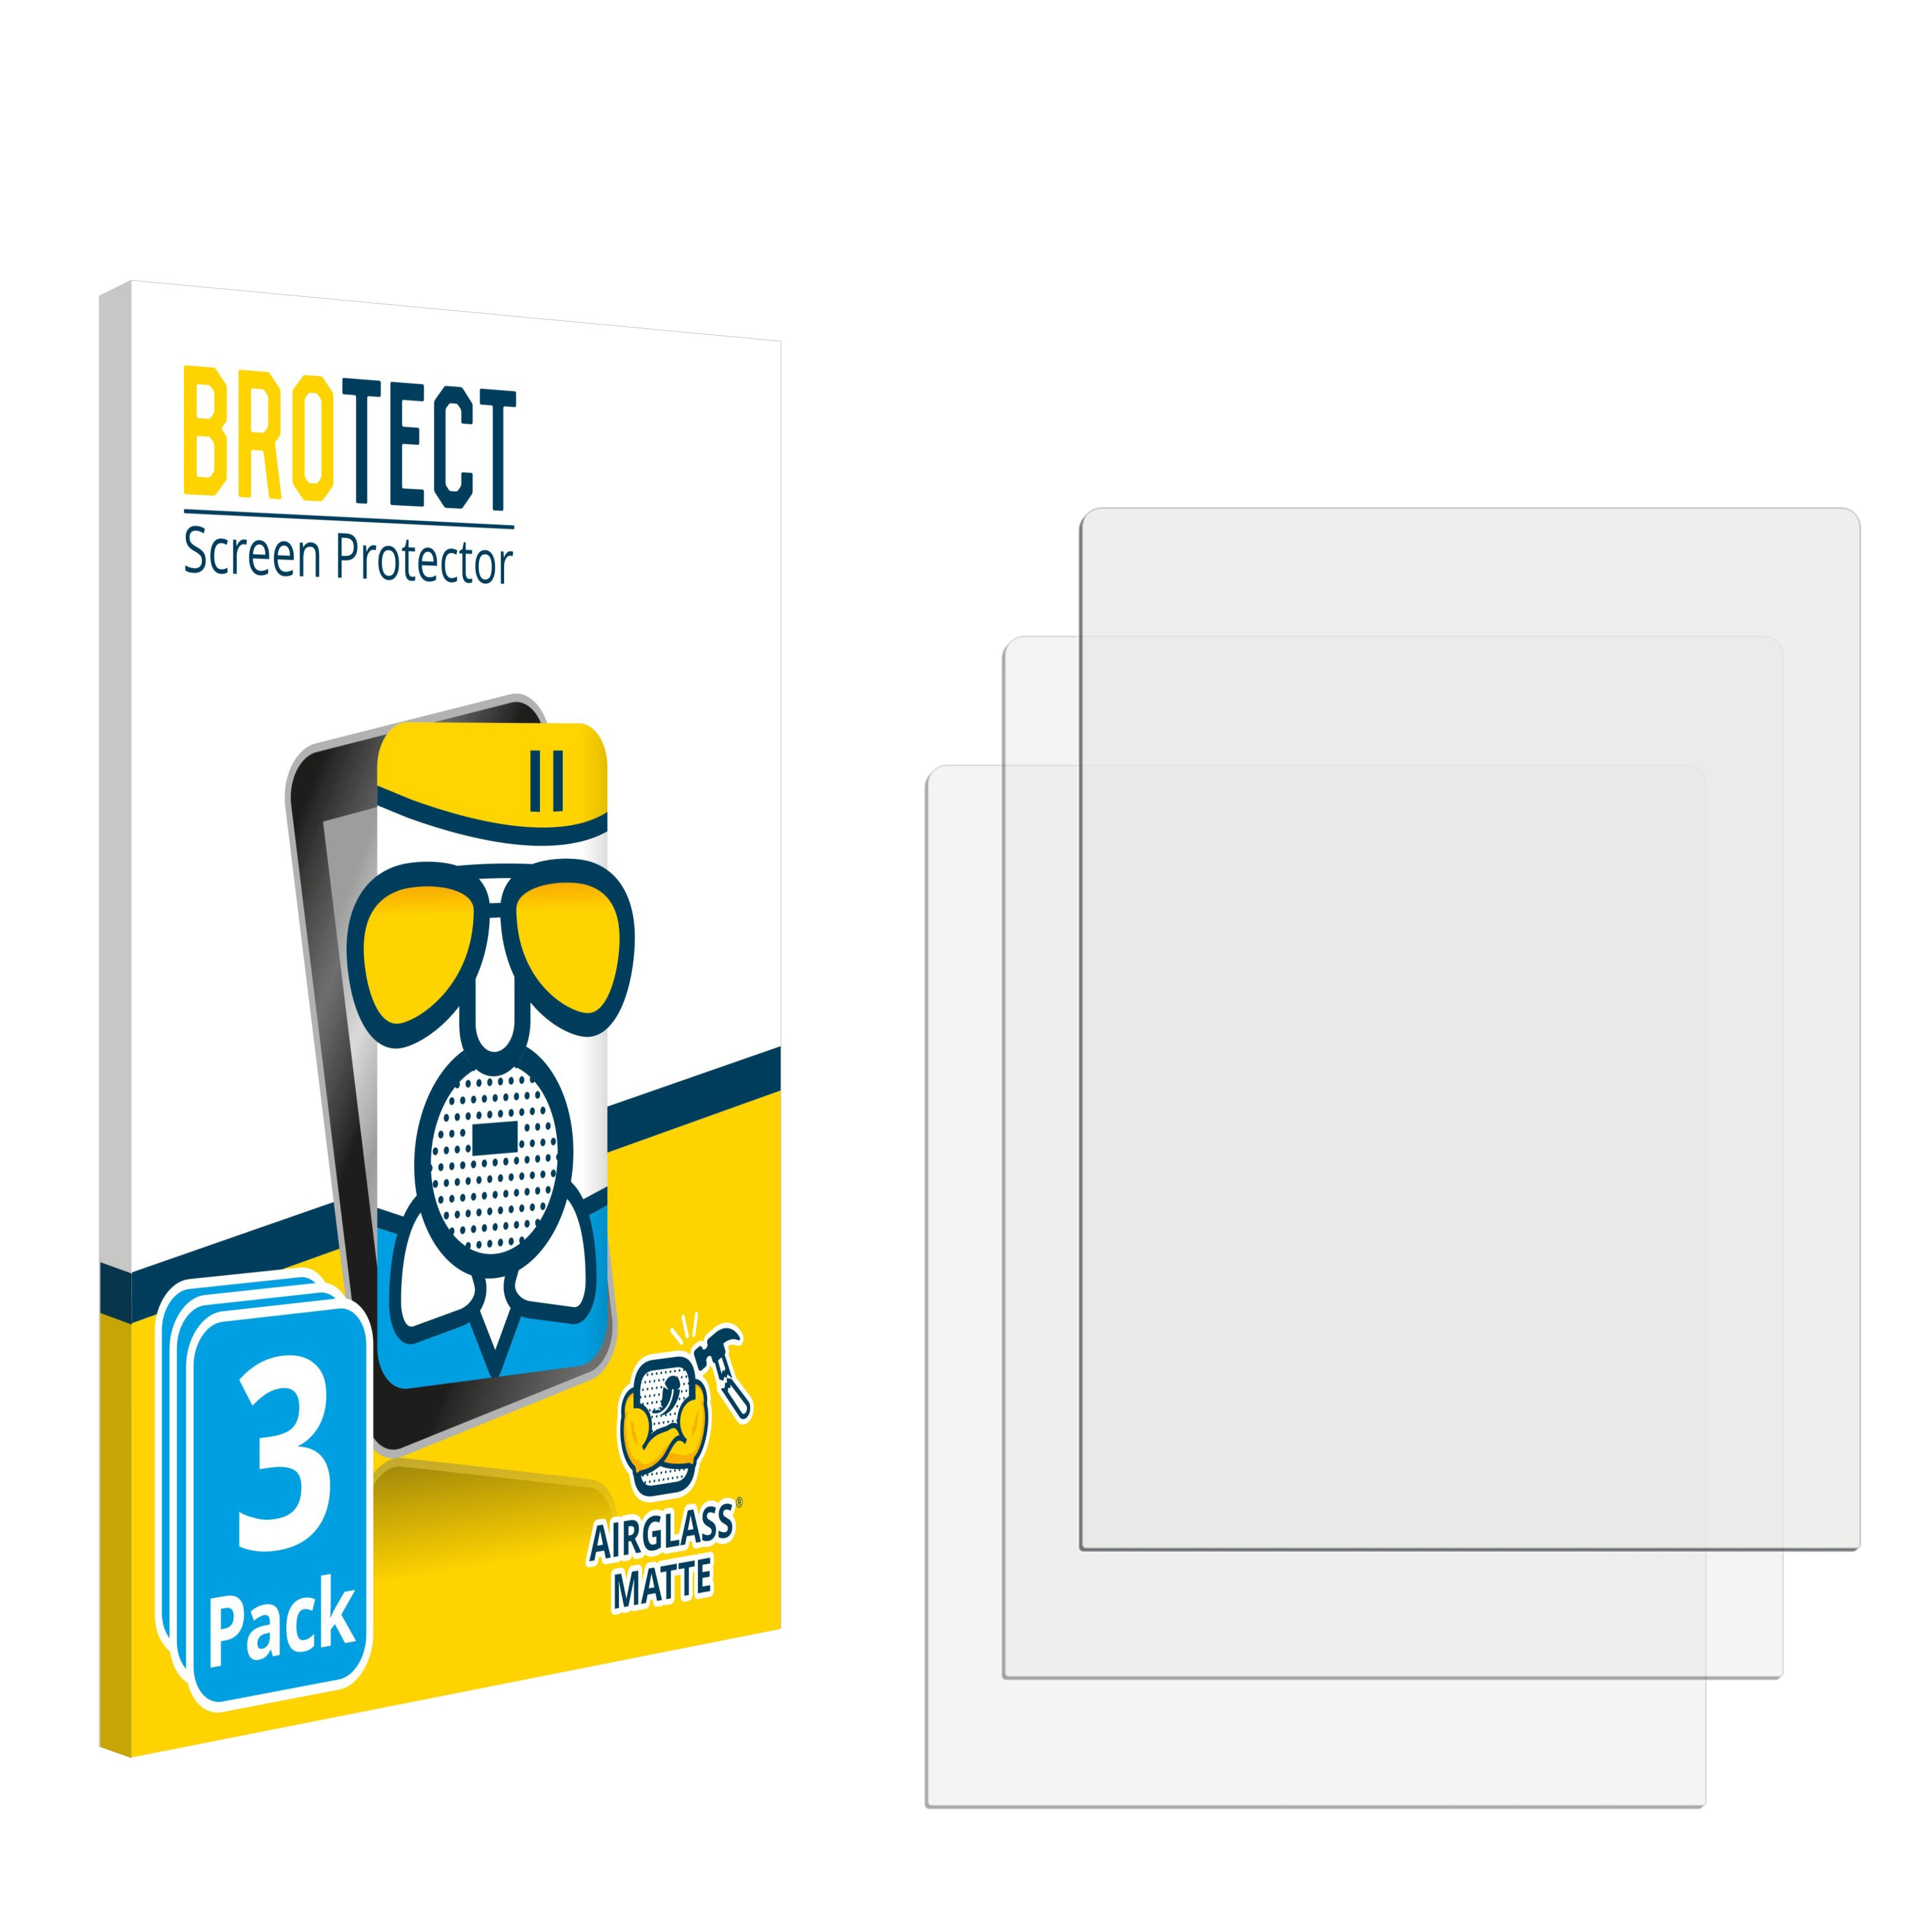 BROTECT 3x Airglass matte 2020) Bosch Schutzfolie(für Nyon